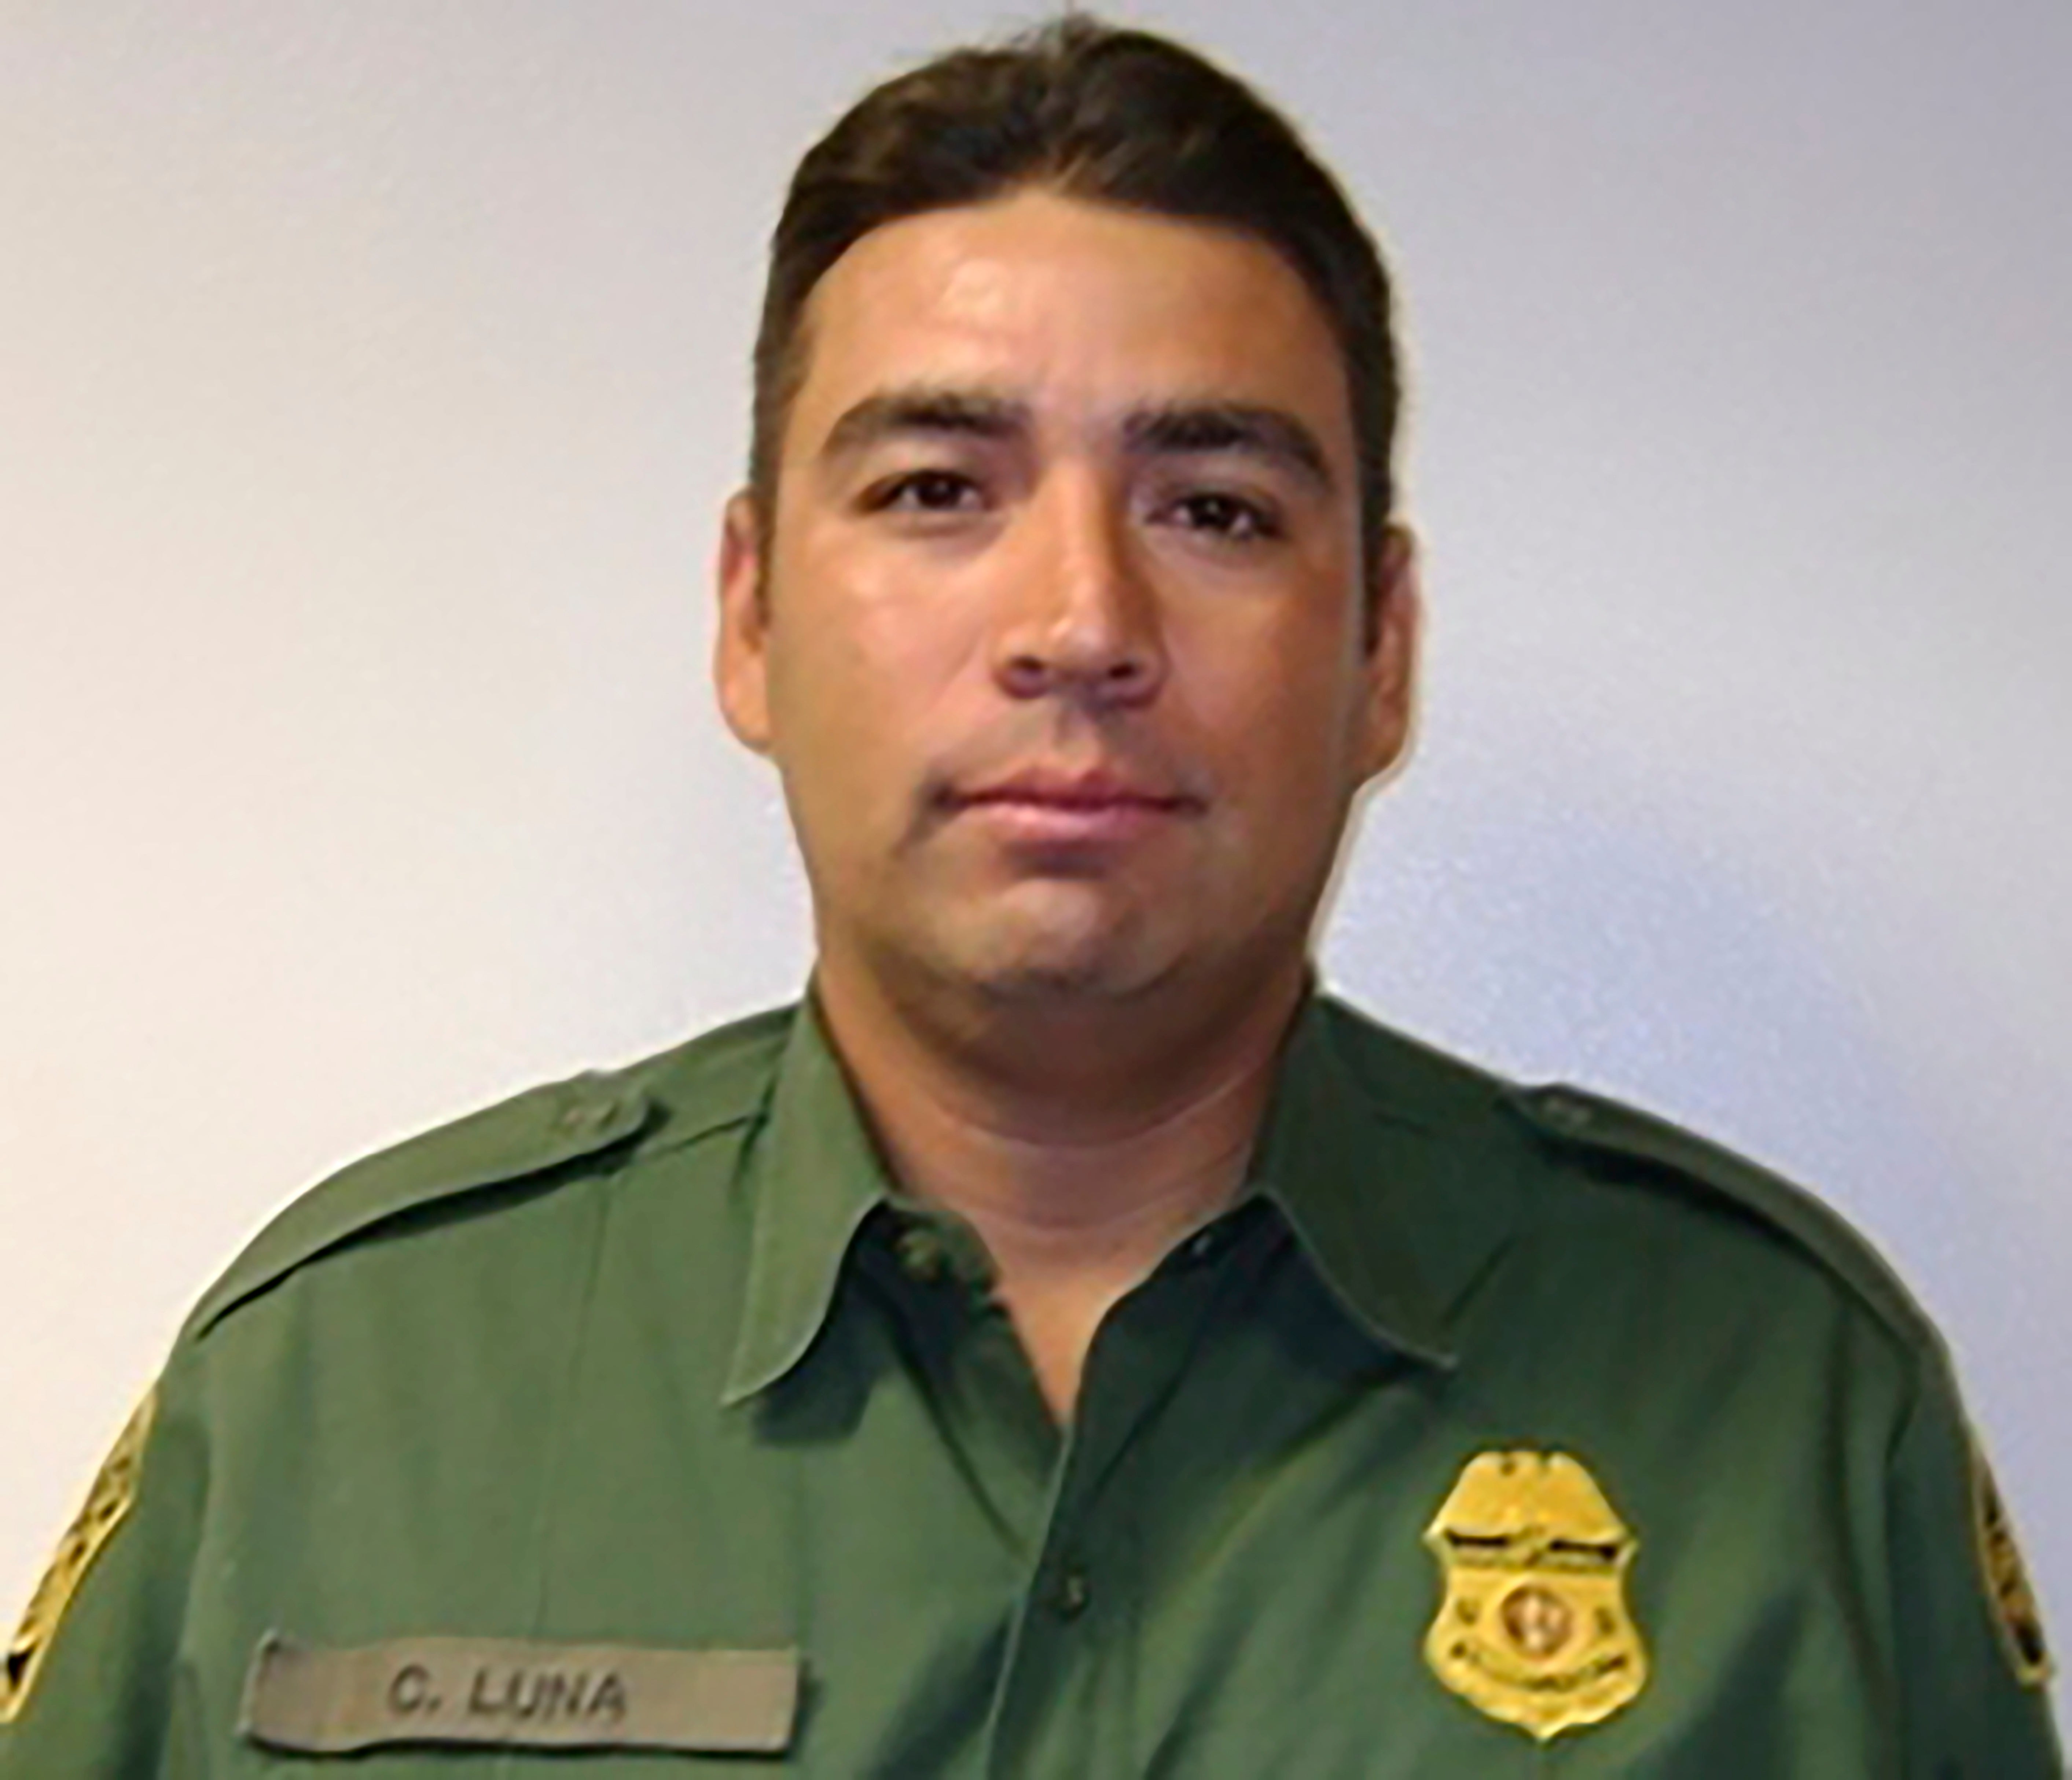 Border Patrol Agent Chris Luna